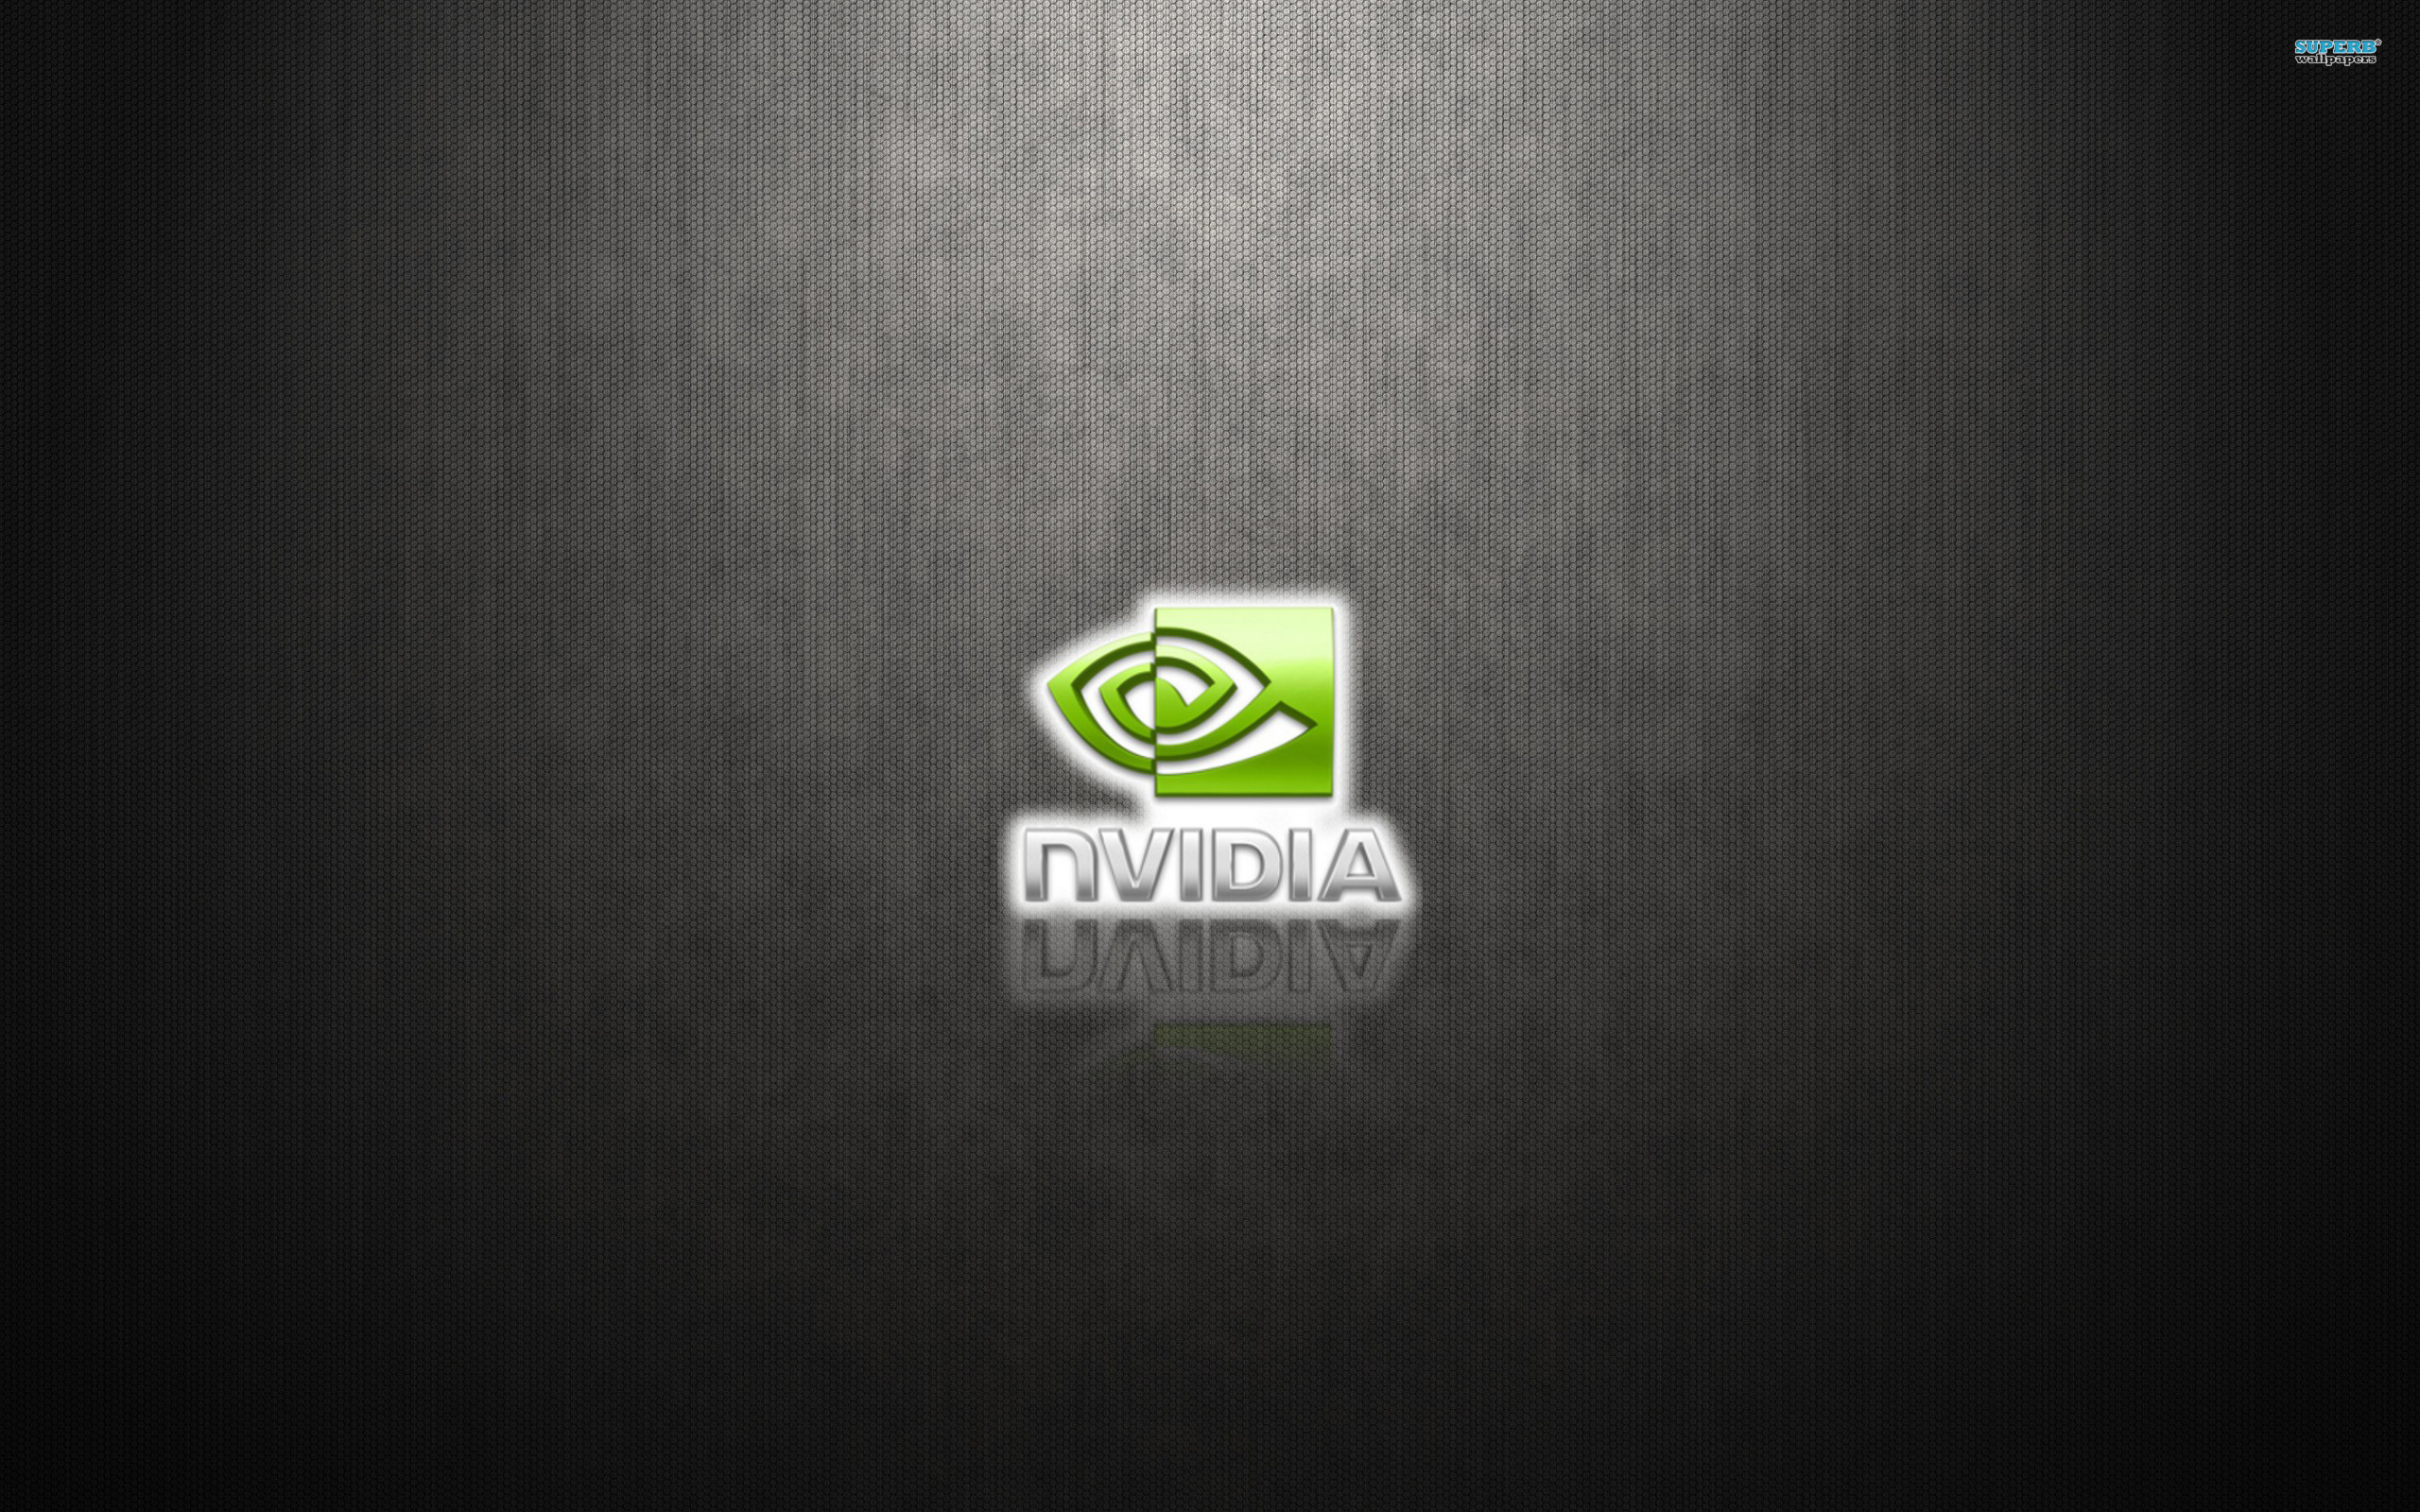 Nvidia : Desktop and mobile wallpaper : Wallippo